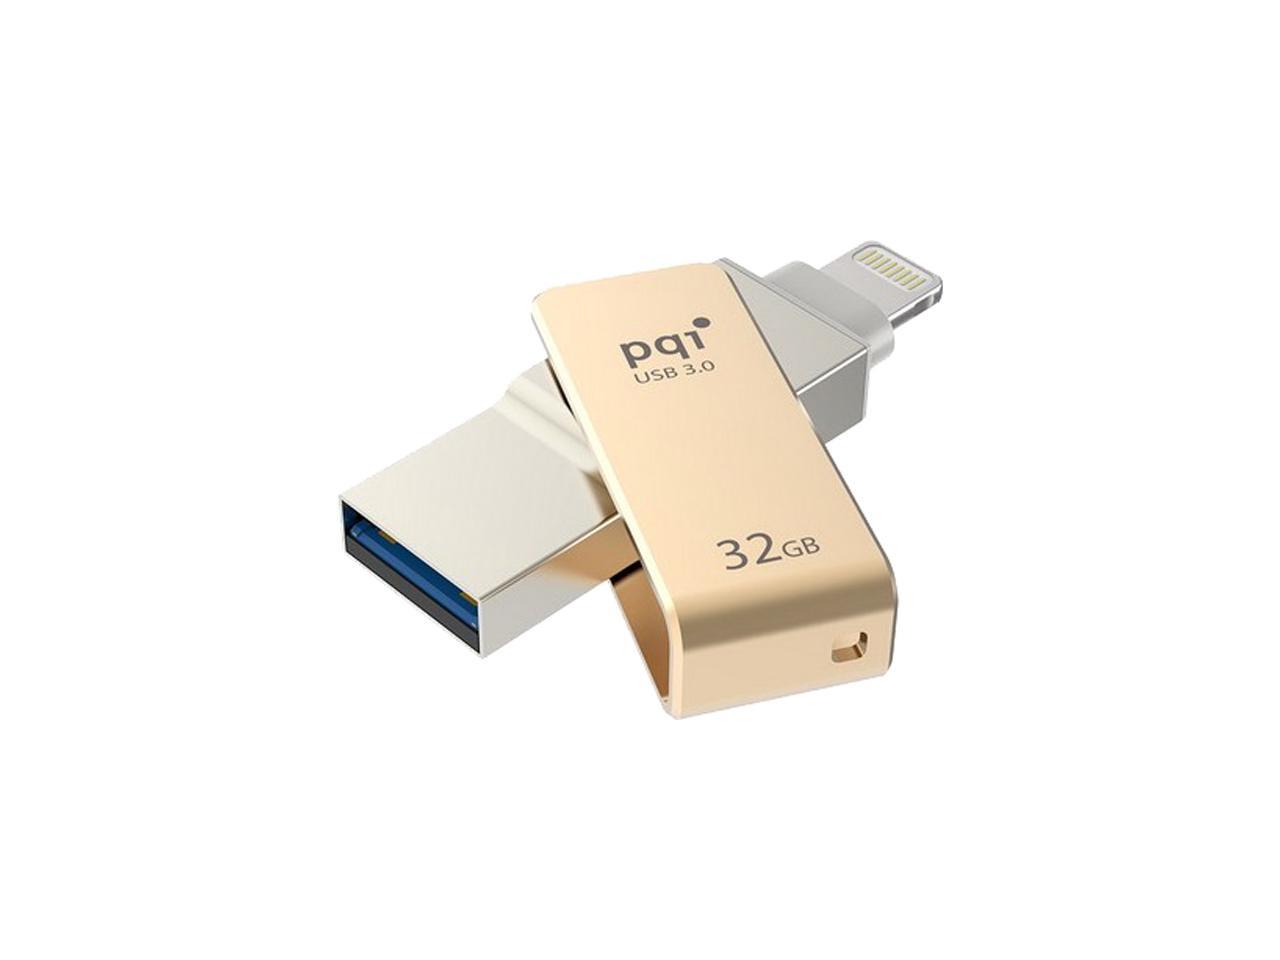 PQI iConnect Mini [Apple MFi] 32GB Mobile Flash Drive w/ Lightning Connector for iPhones / iPads / iPod / Mac & PC USB 3.0 (Gold) Model 6I04-032GR2001